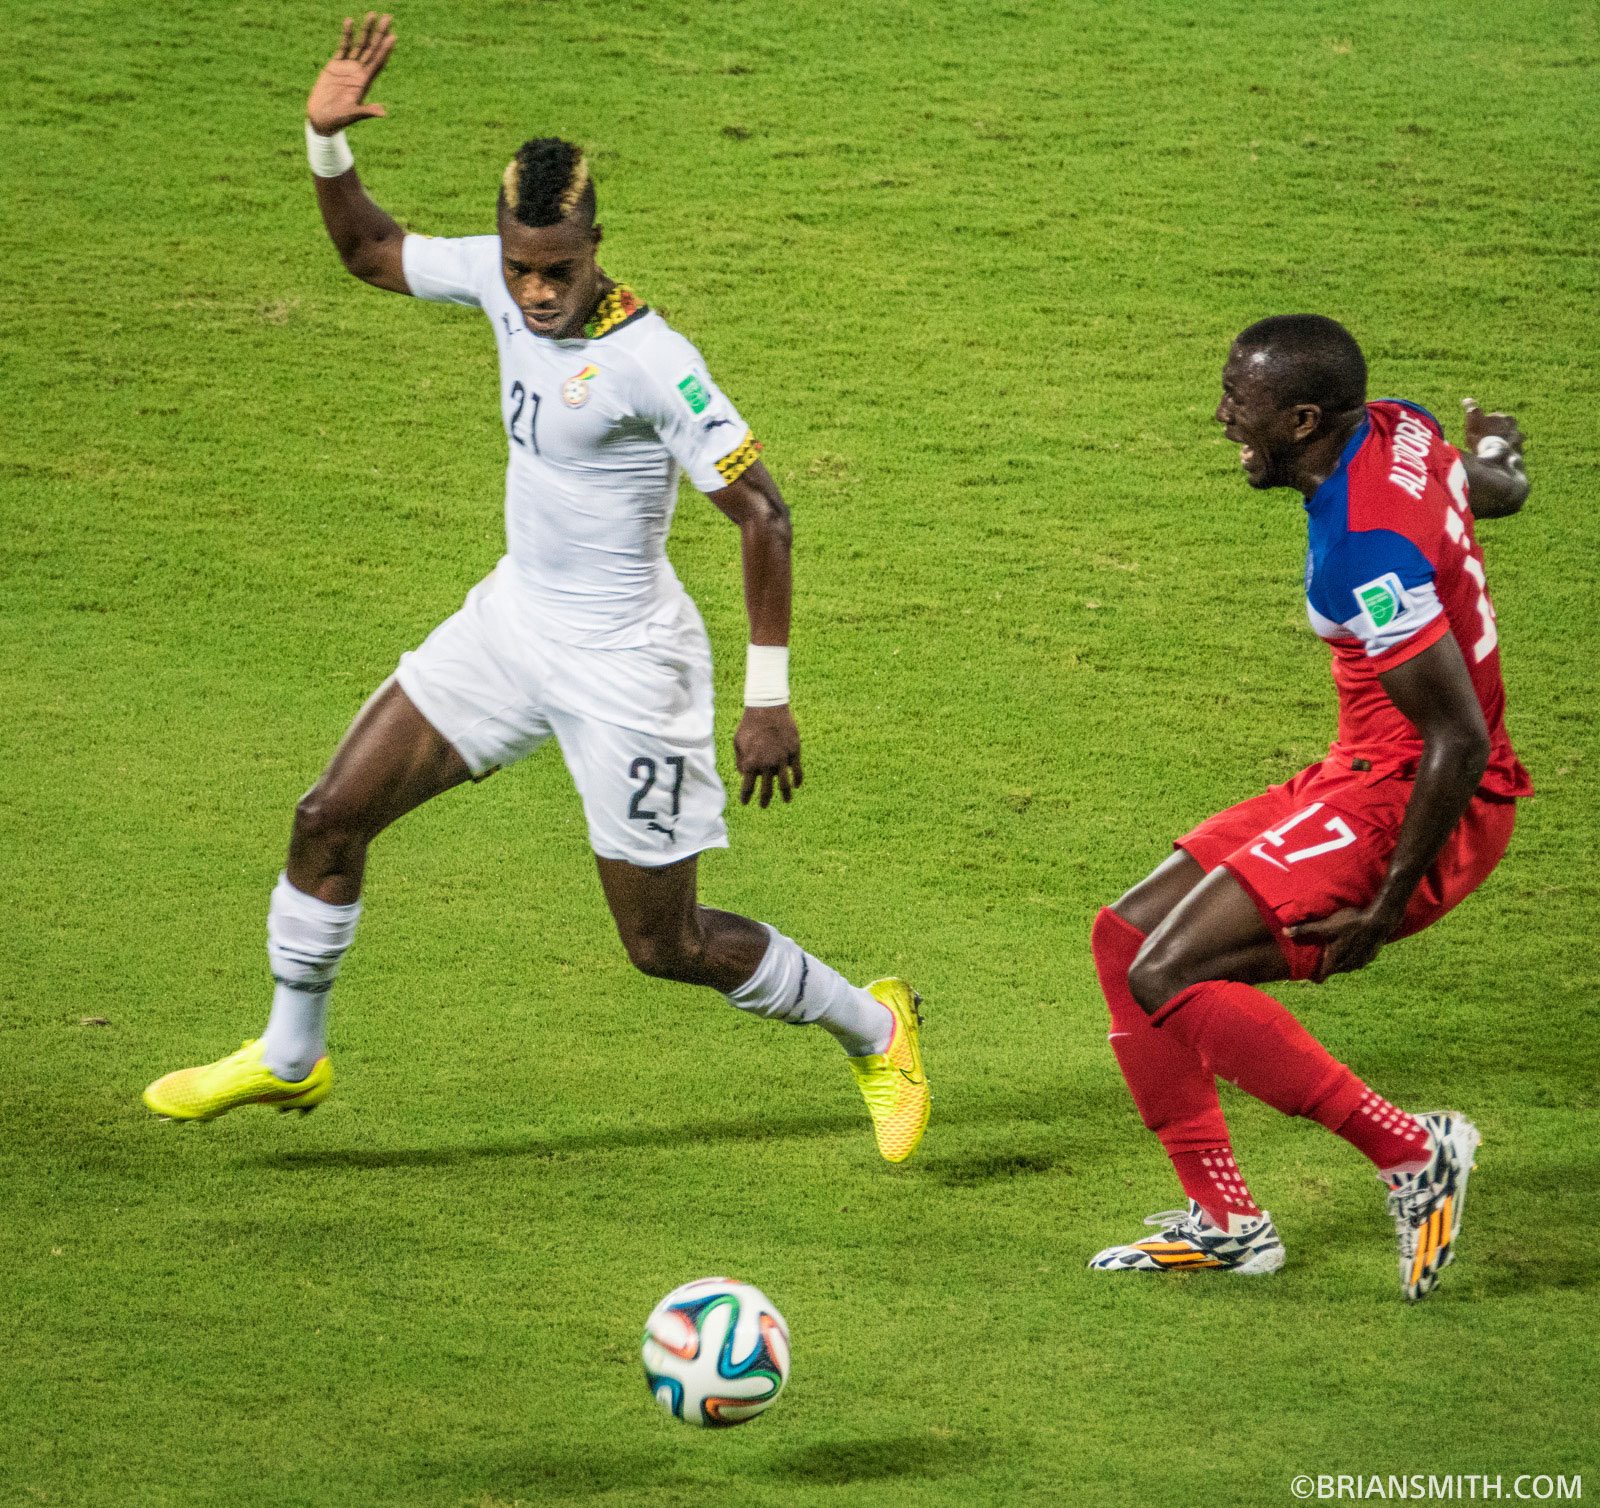 USA-Ghana World Cup Soccer Match in Natal, Brazil